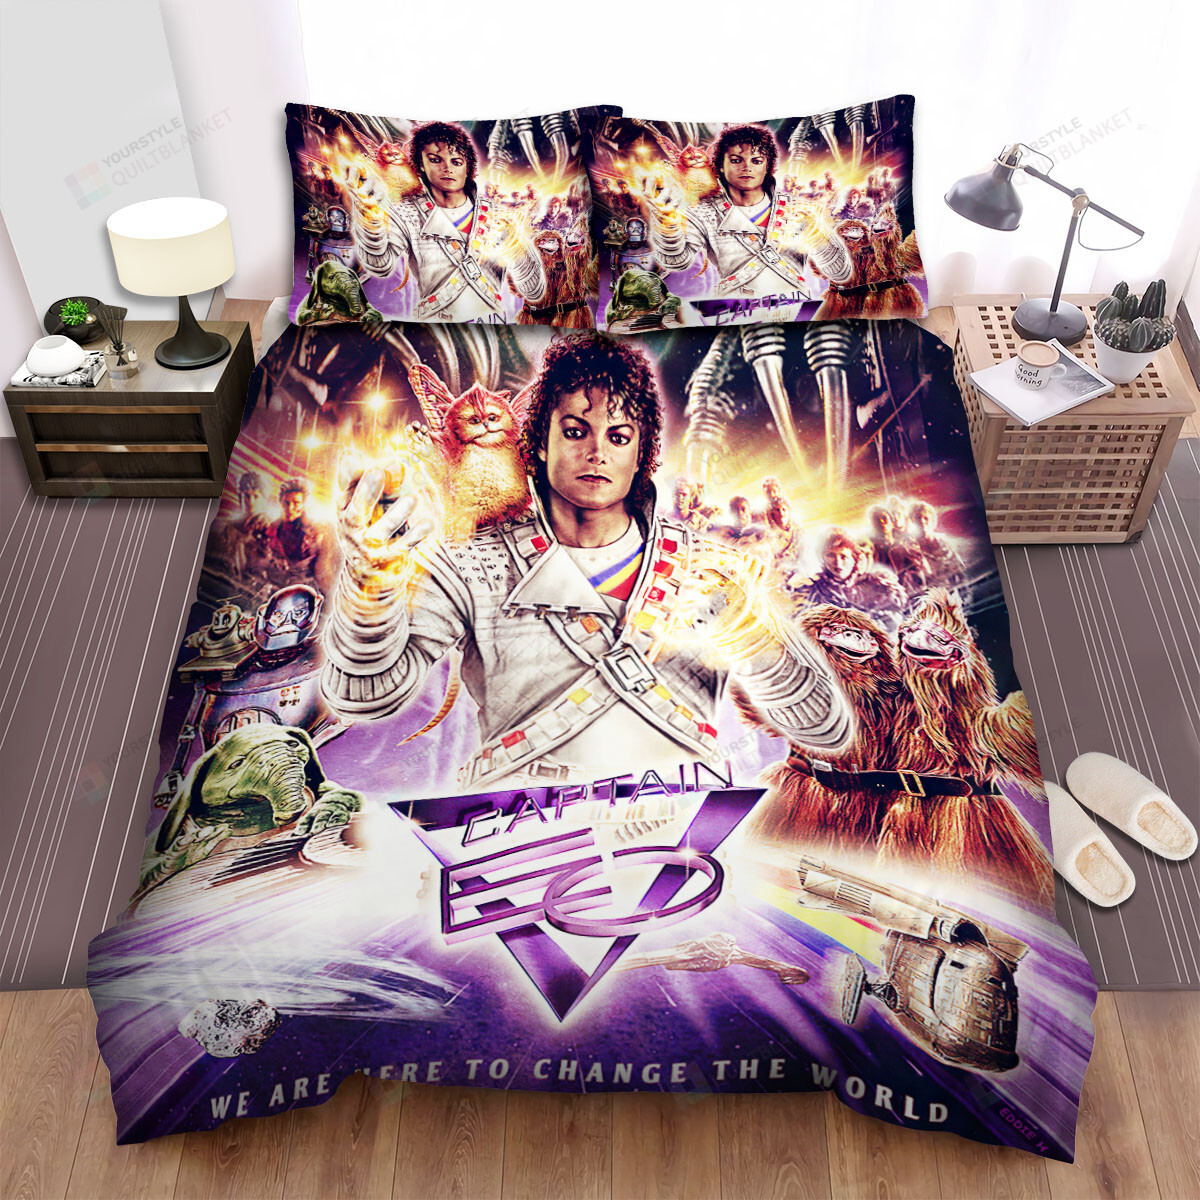 Michael Jackson Captain Eo Movie Art Poster Bed Sheets Spread Comforter Duvet Cover Bedding Sets